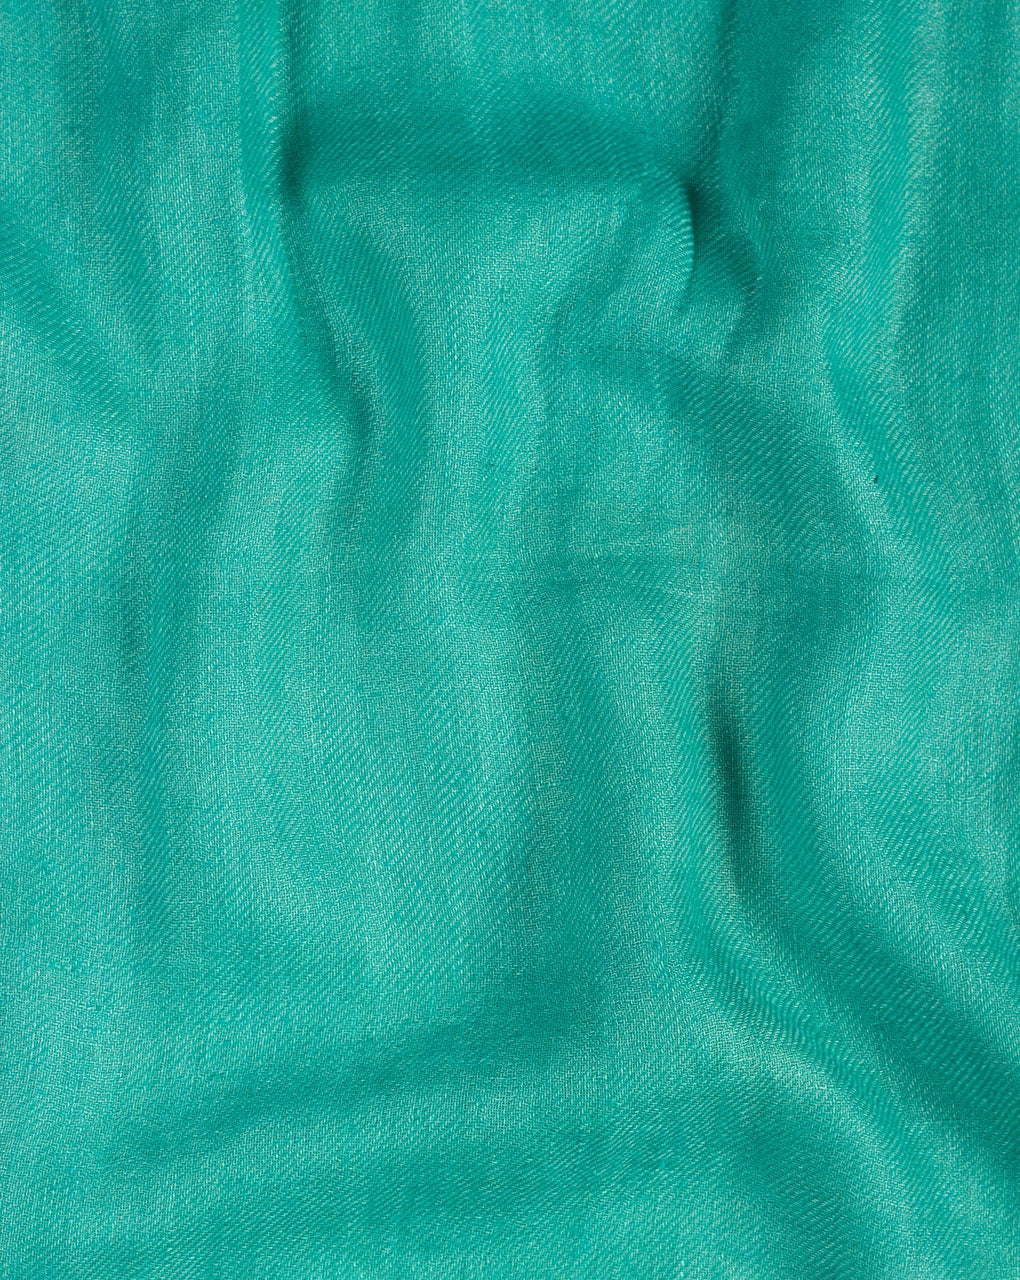 Sea Green Plain Woven Bhagalpuri Linen Stole - Fabriclore.com